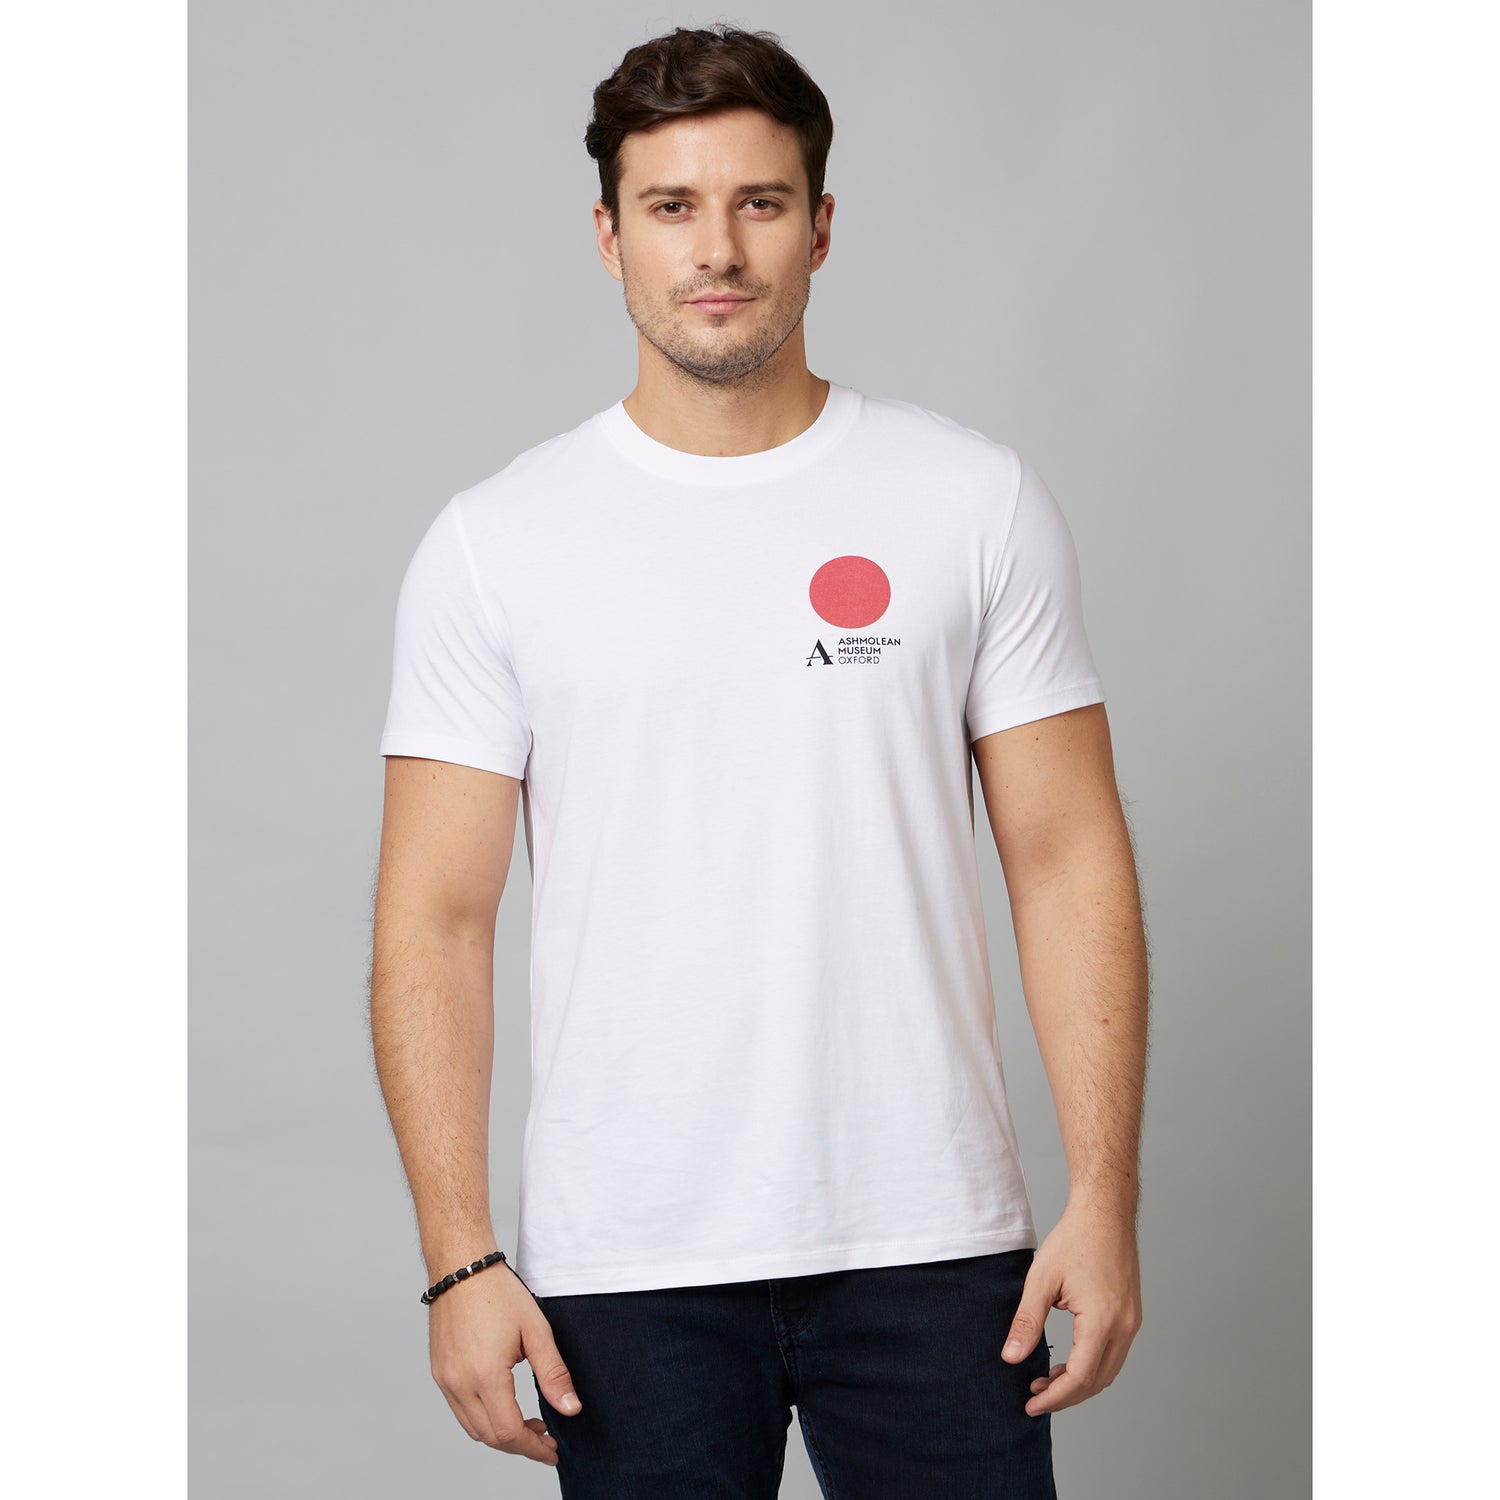 White Graphic Printed Short Sleeve Cotton T-Shirts (LDEJAPAN)